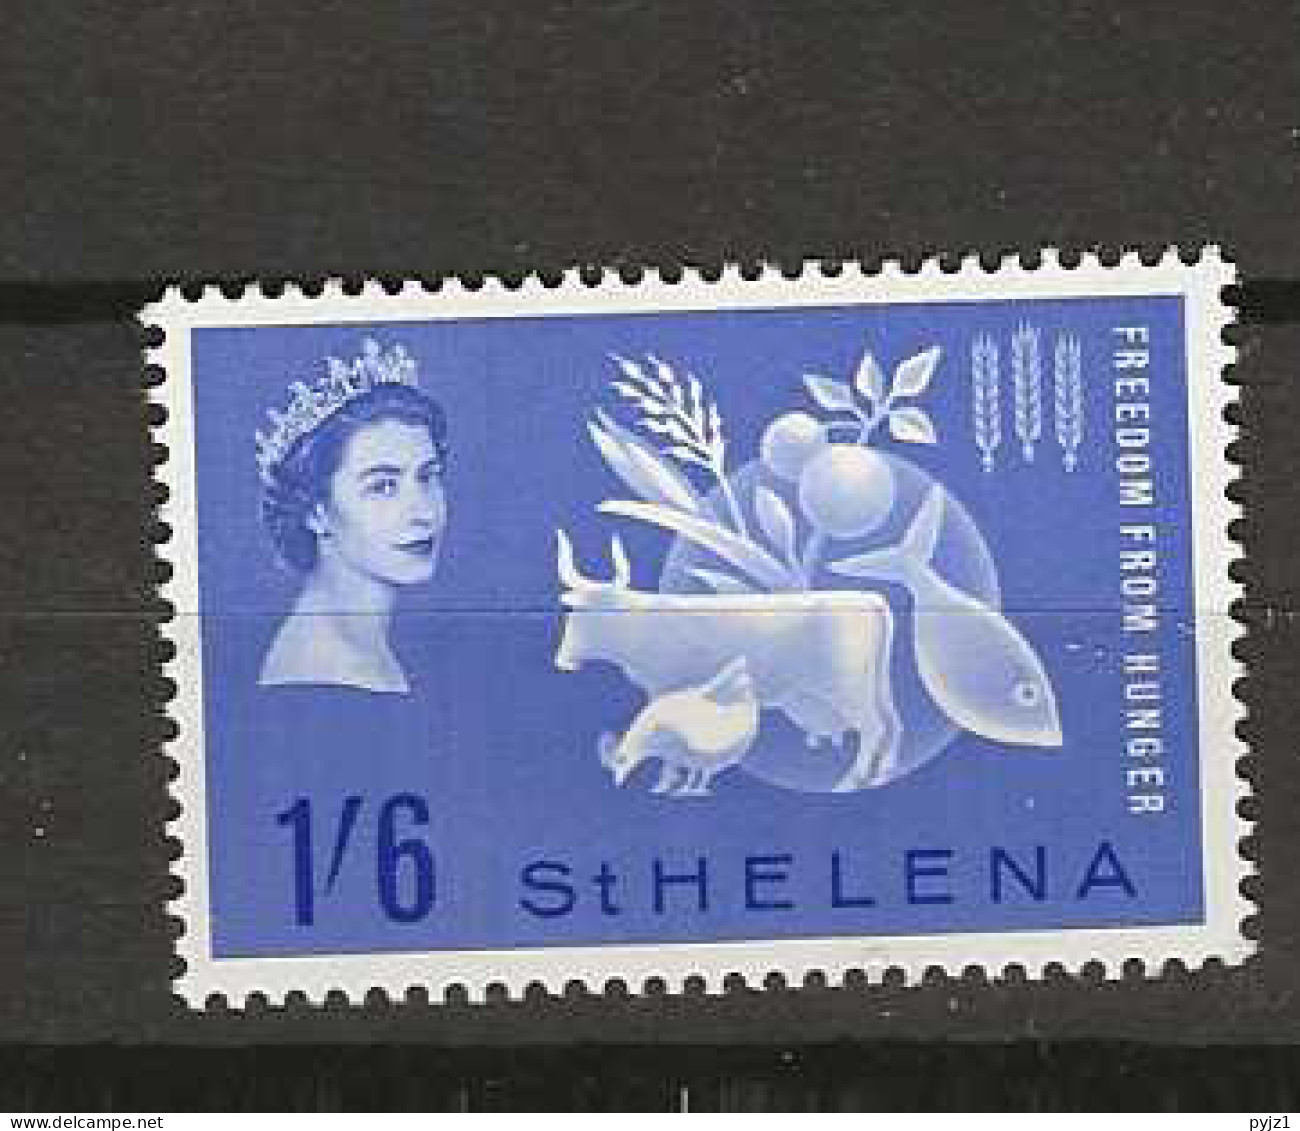 1963 MNH Saint Helena Mi 160 Postfris** - Saint Helena Island